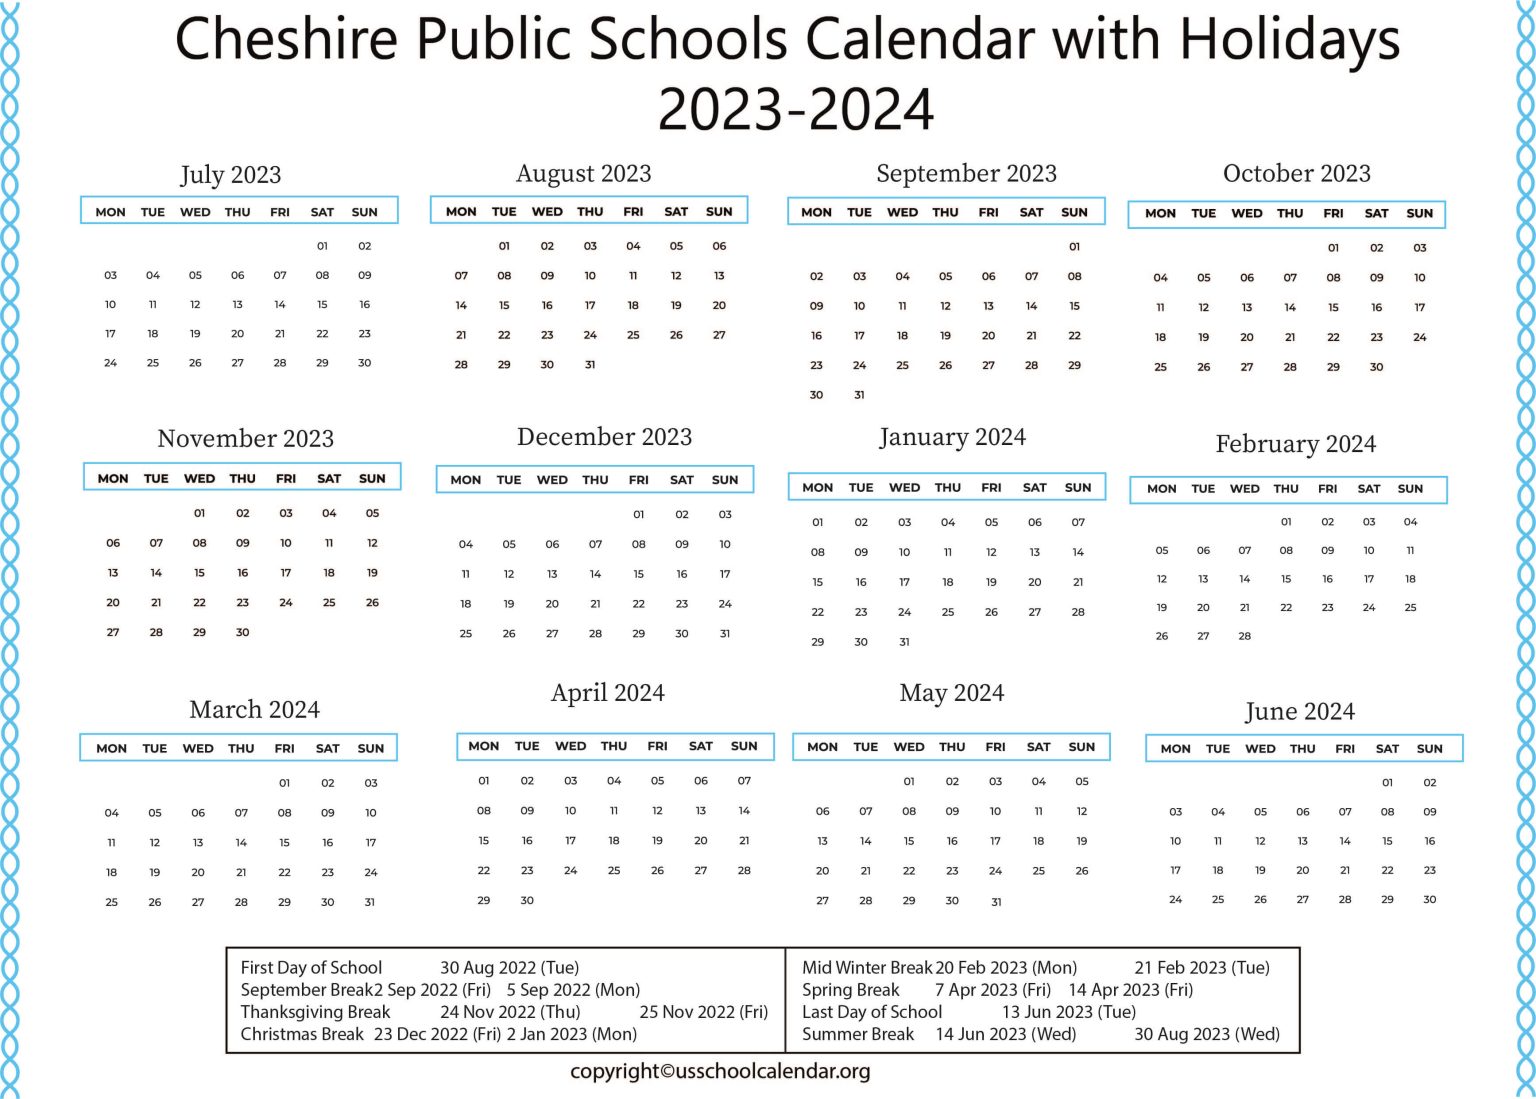 cheshire-public-schools-calendar-with-holidays-2023-2024